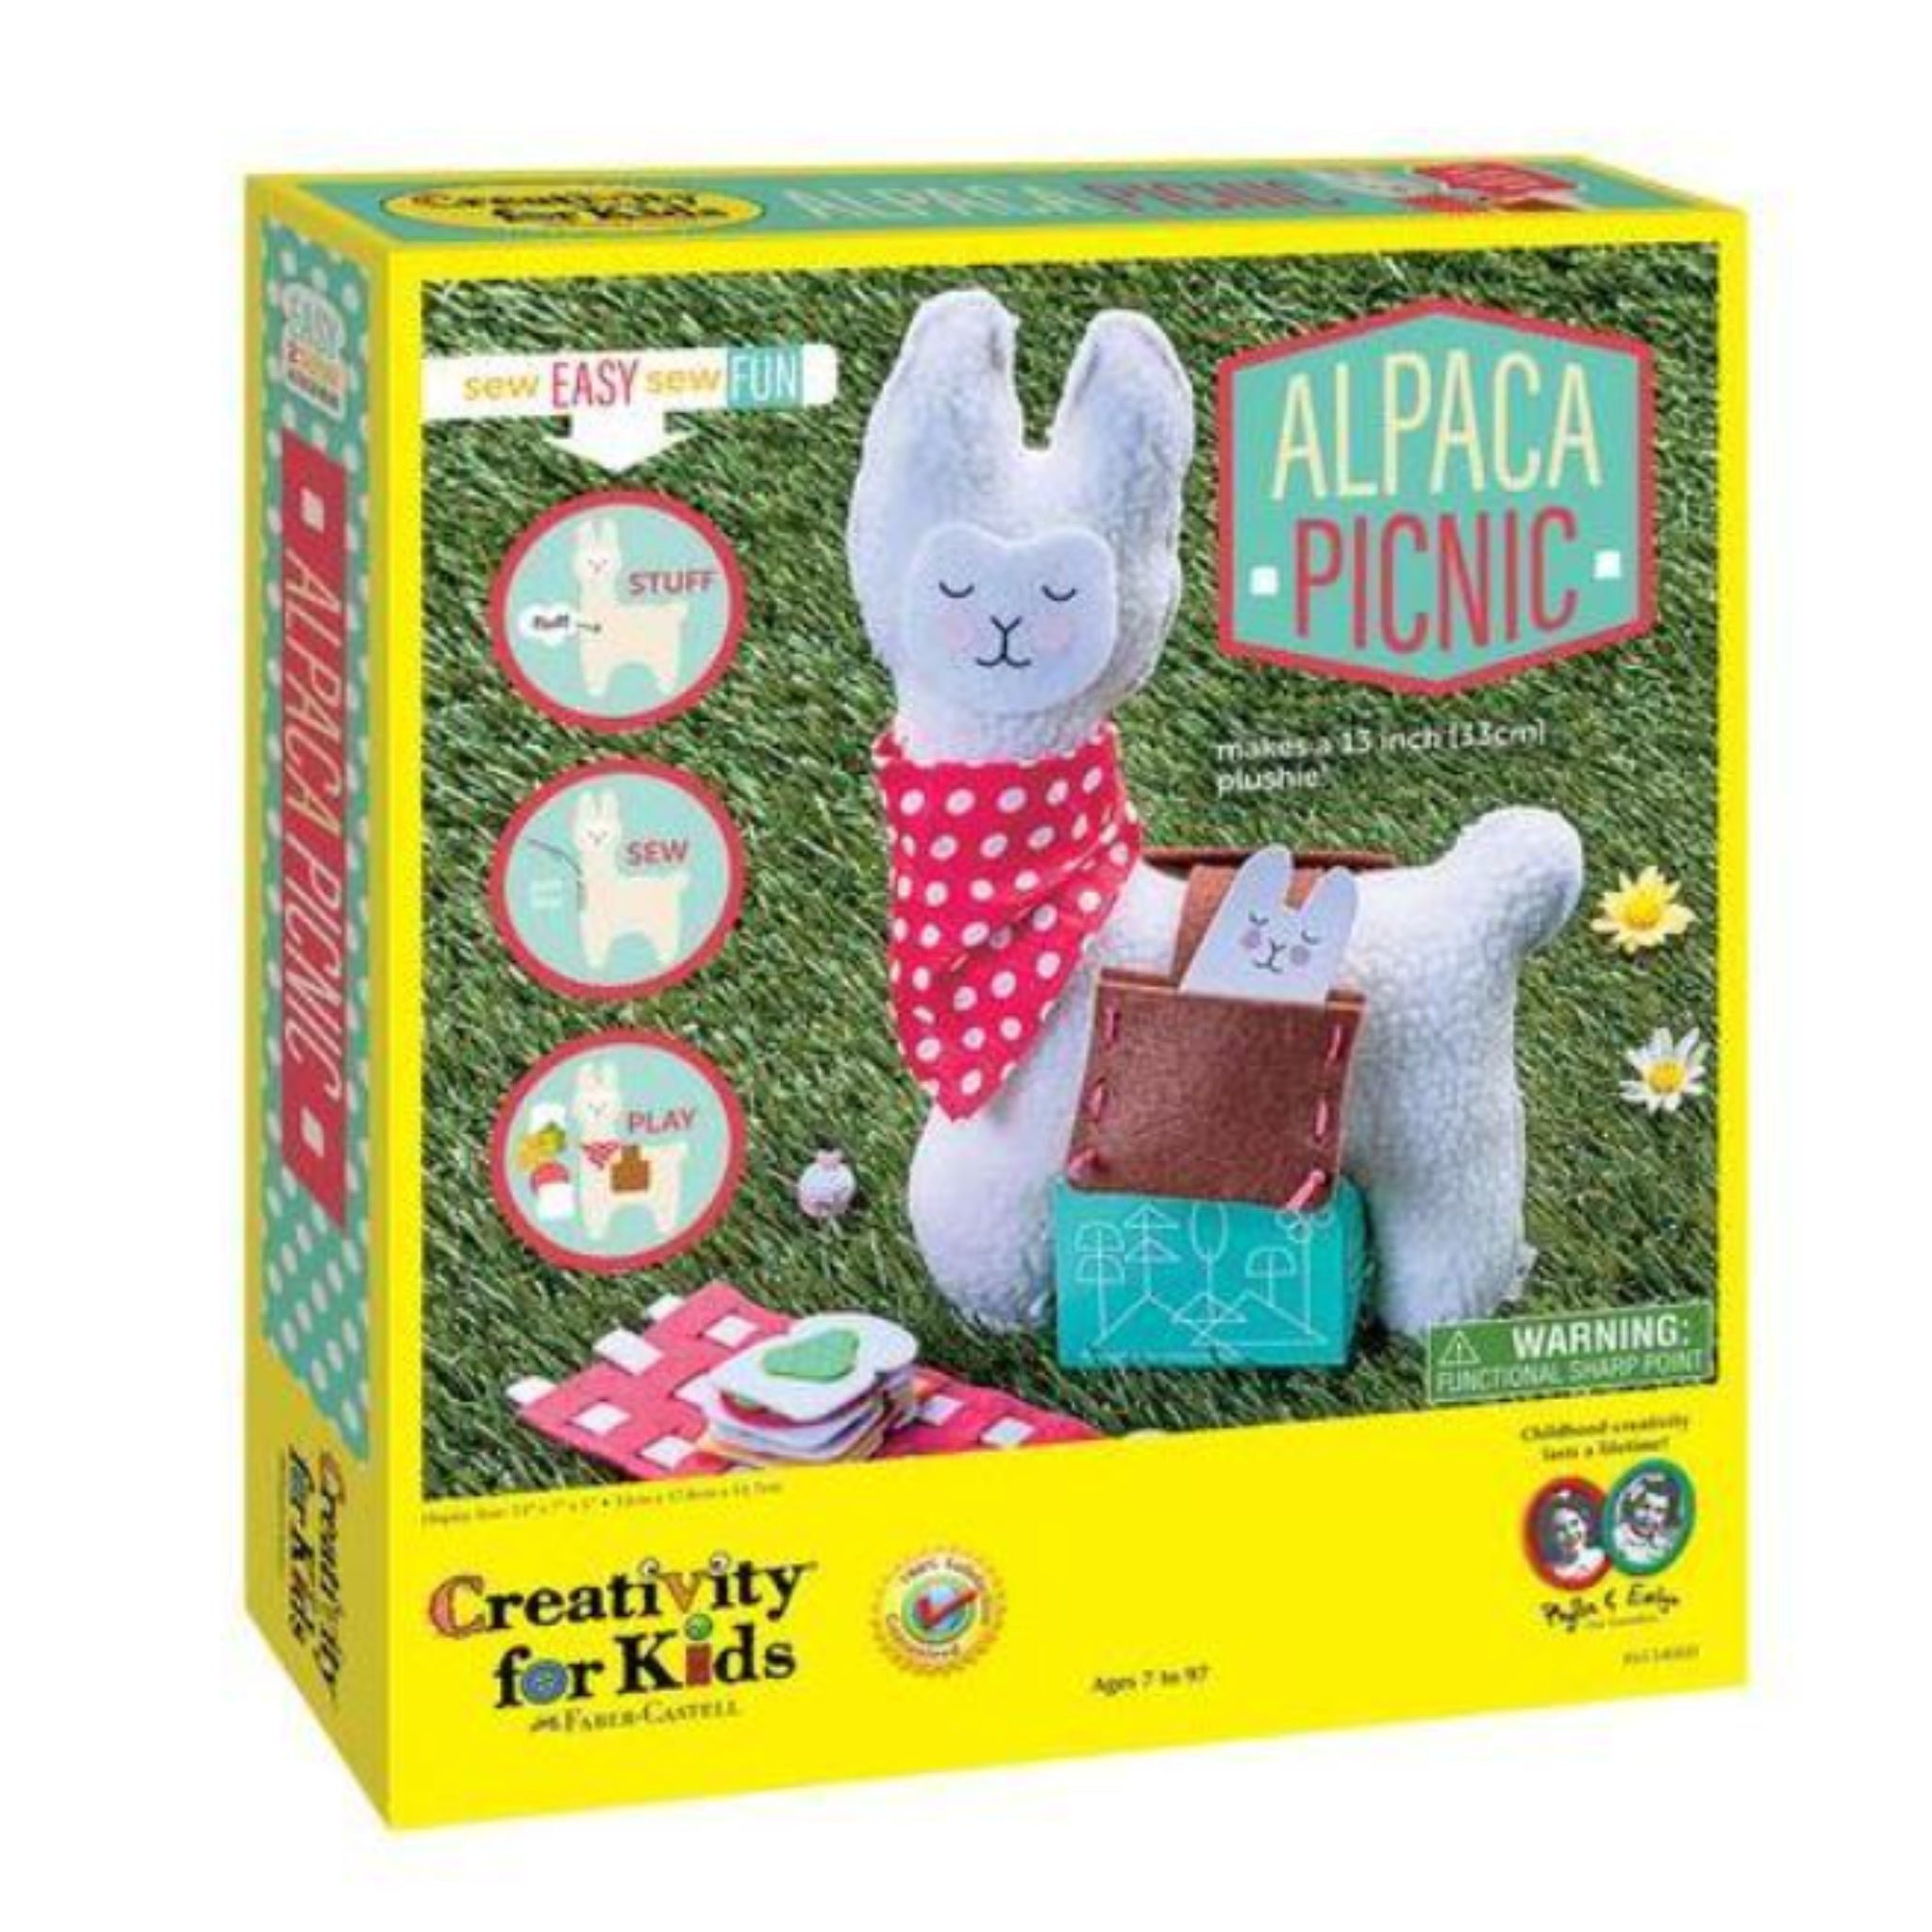 Alpaca Picnic! Children's sewing kit